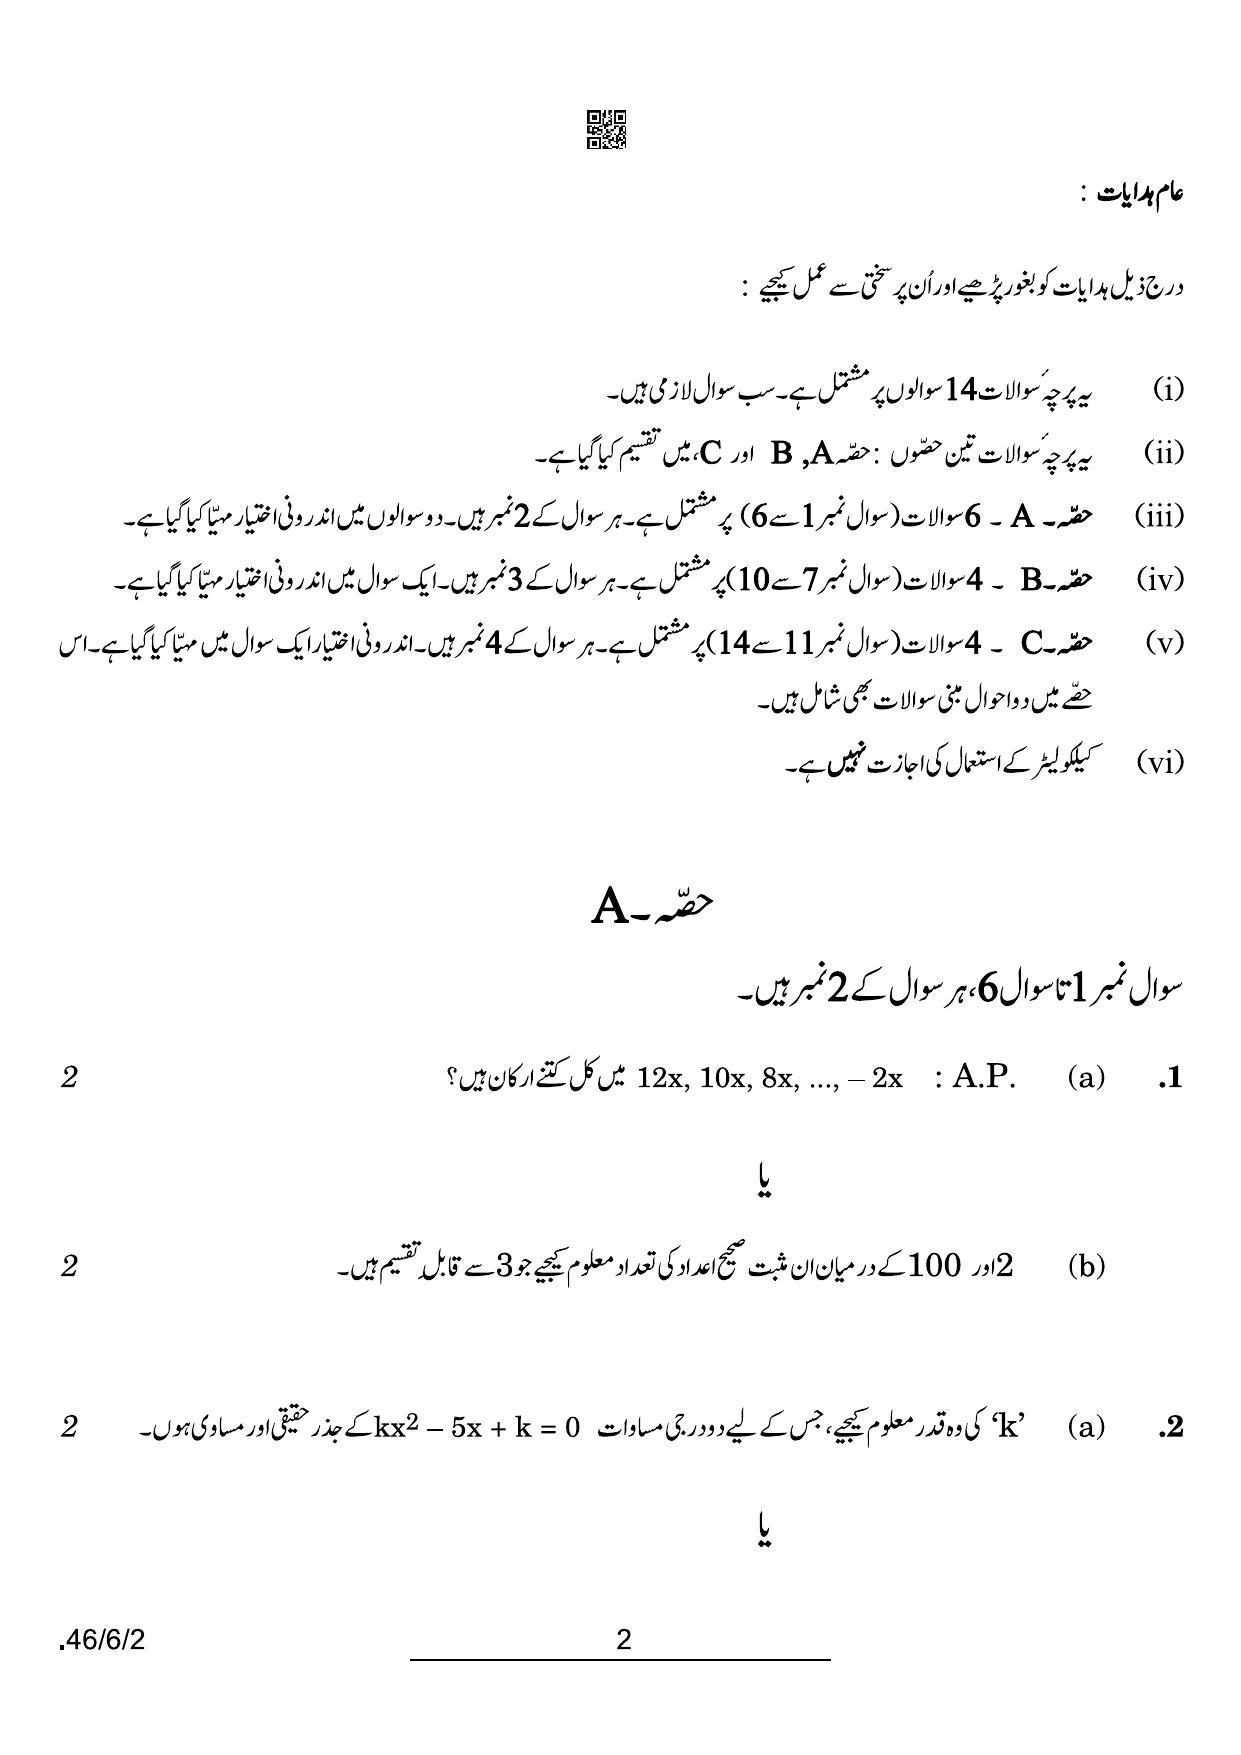 CBSE Class 10 46-6-2 Maths Standard Urdu 2022 Compartment Question Paper - Page 2